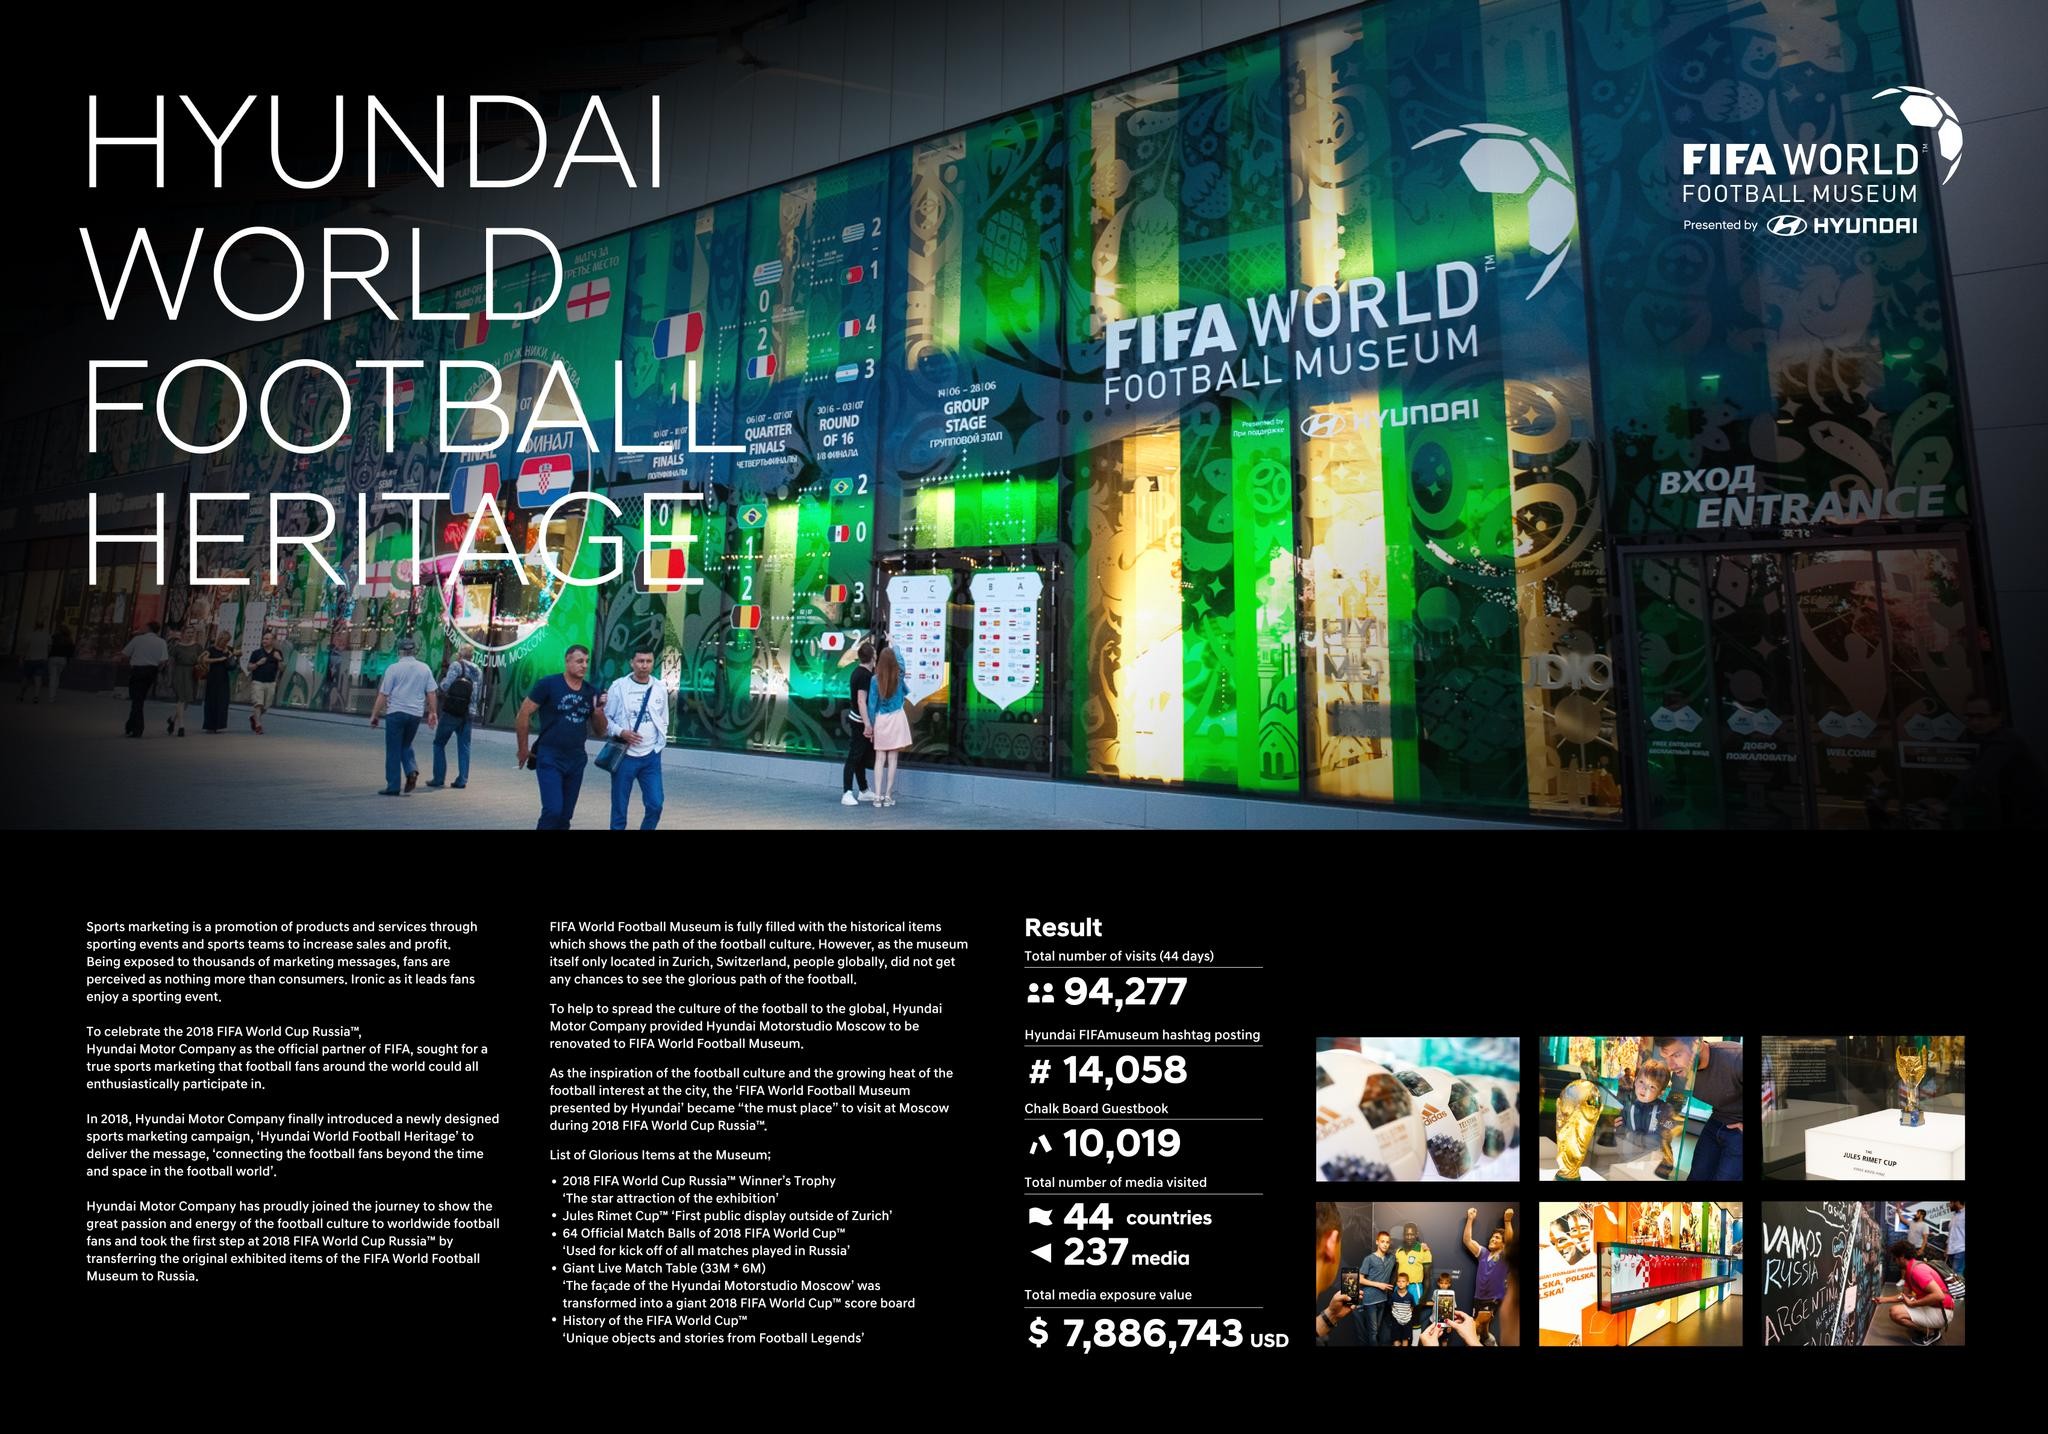 FIFA WORLD FOOTBALL MUSEUM PRESENTED BY HYUNDAI